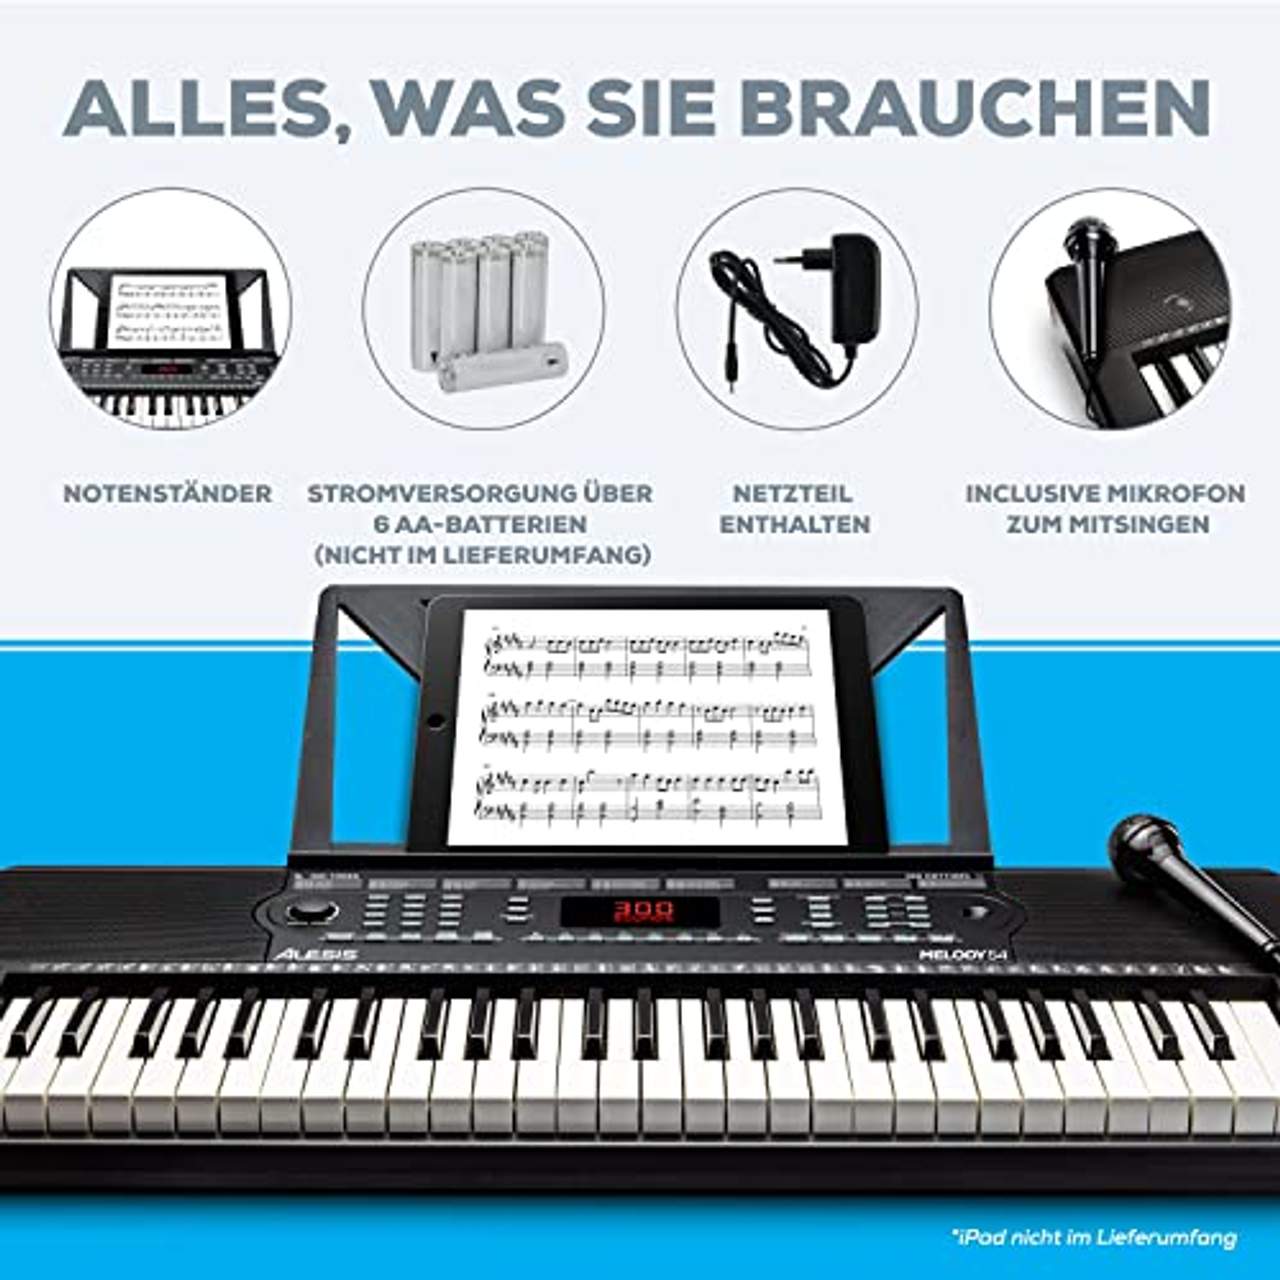 Alesis Melody 54 Tragbares 54-Tasten Keyboard